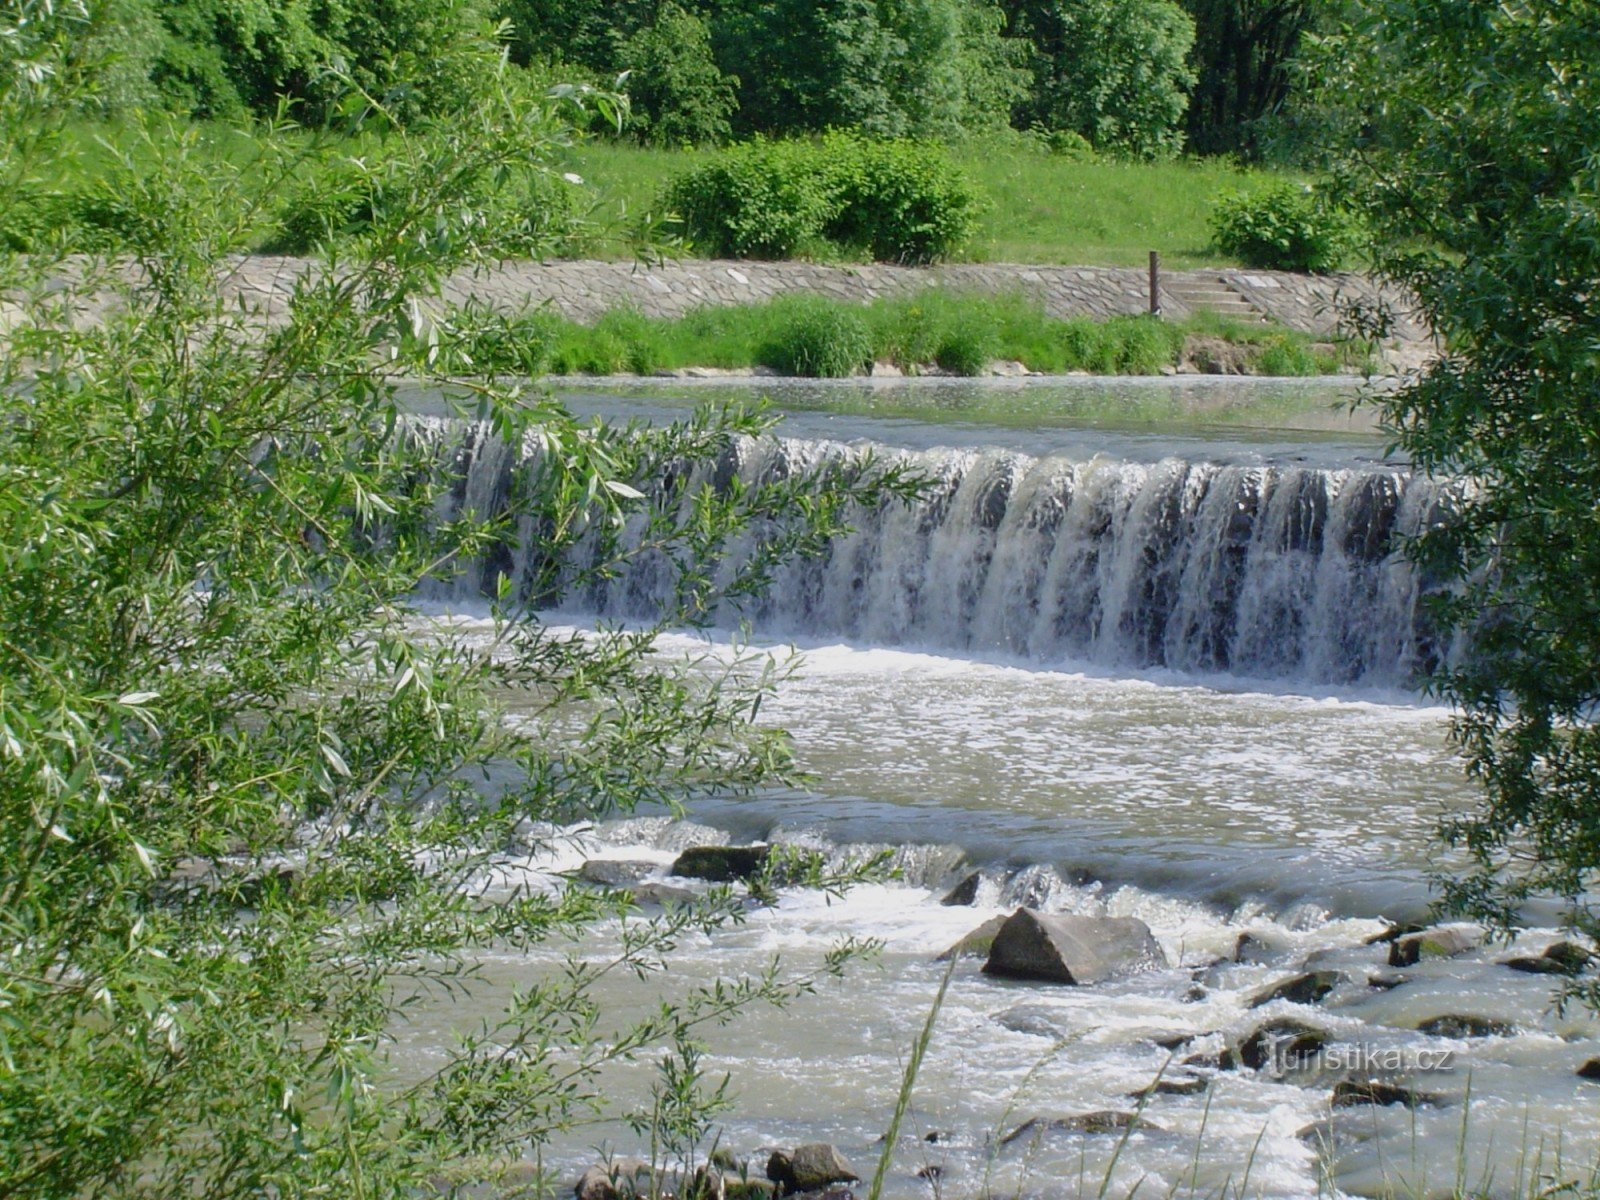 Dětmarovice - Koukolná splav am Fluss Olša